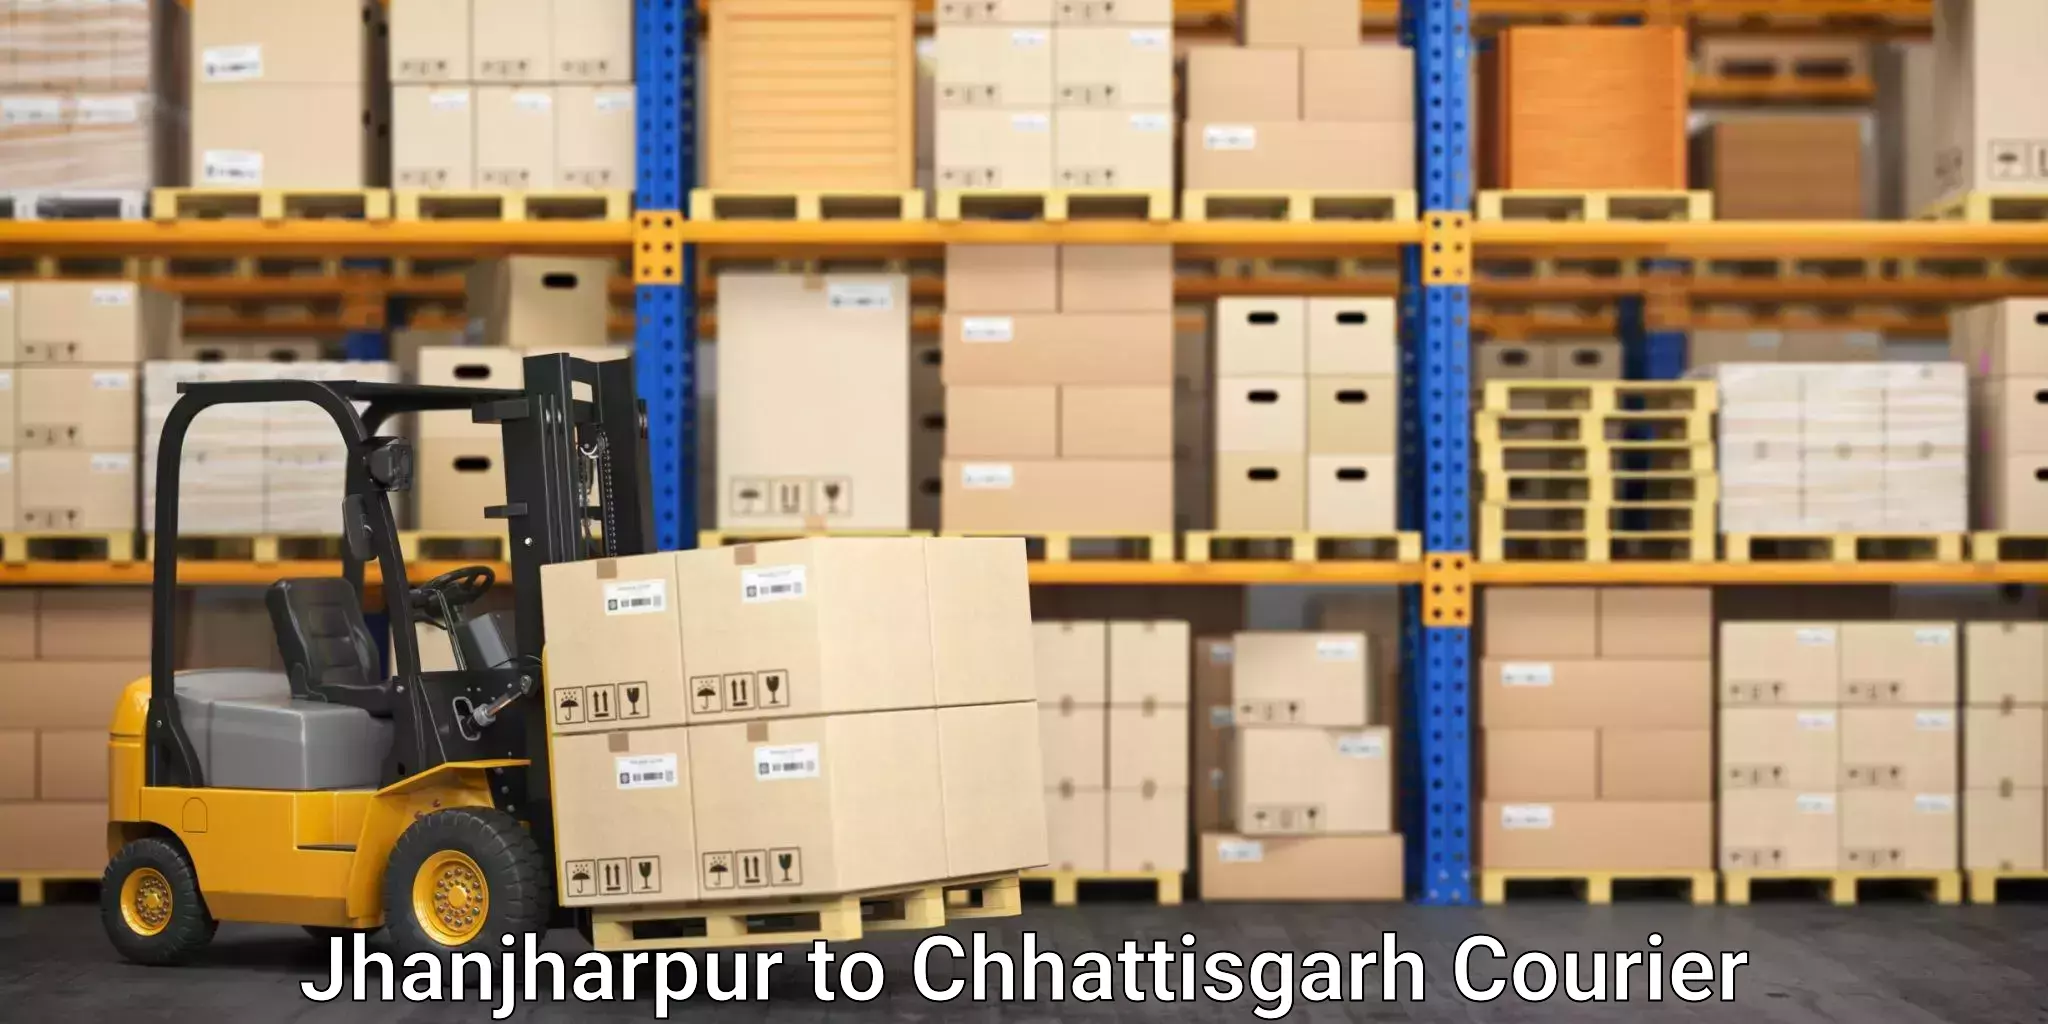 Furniture moving solutions in Jhanjharpur to Korea Chhattisgarh